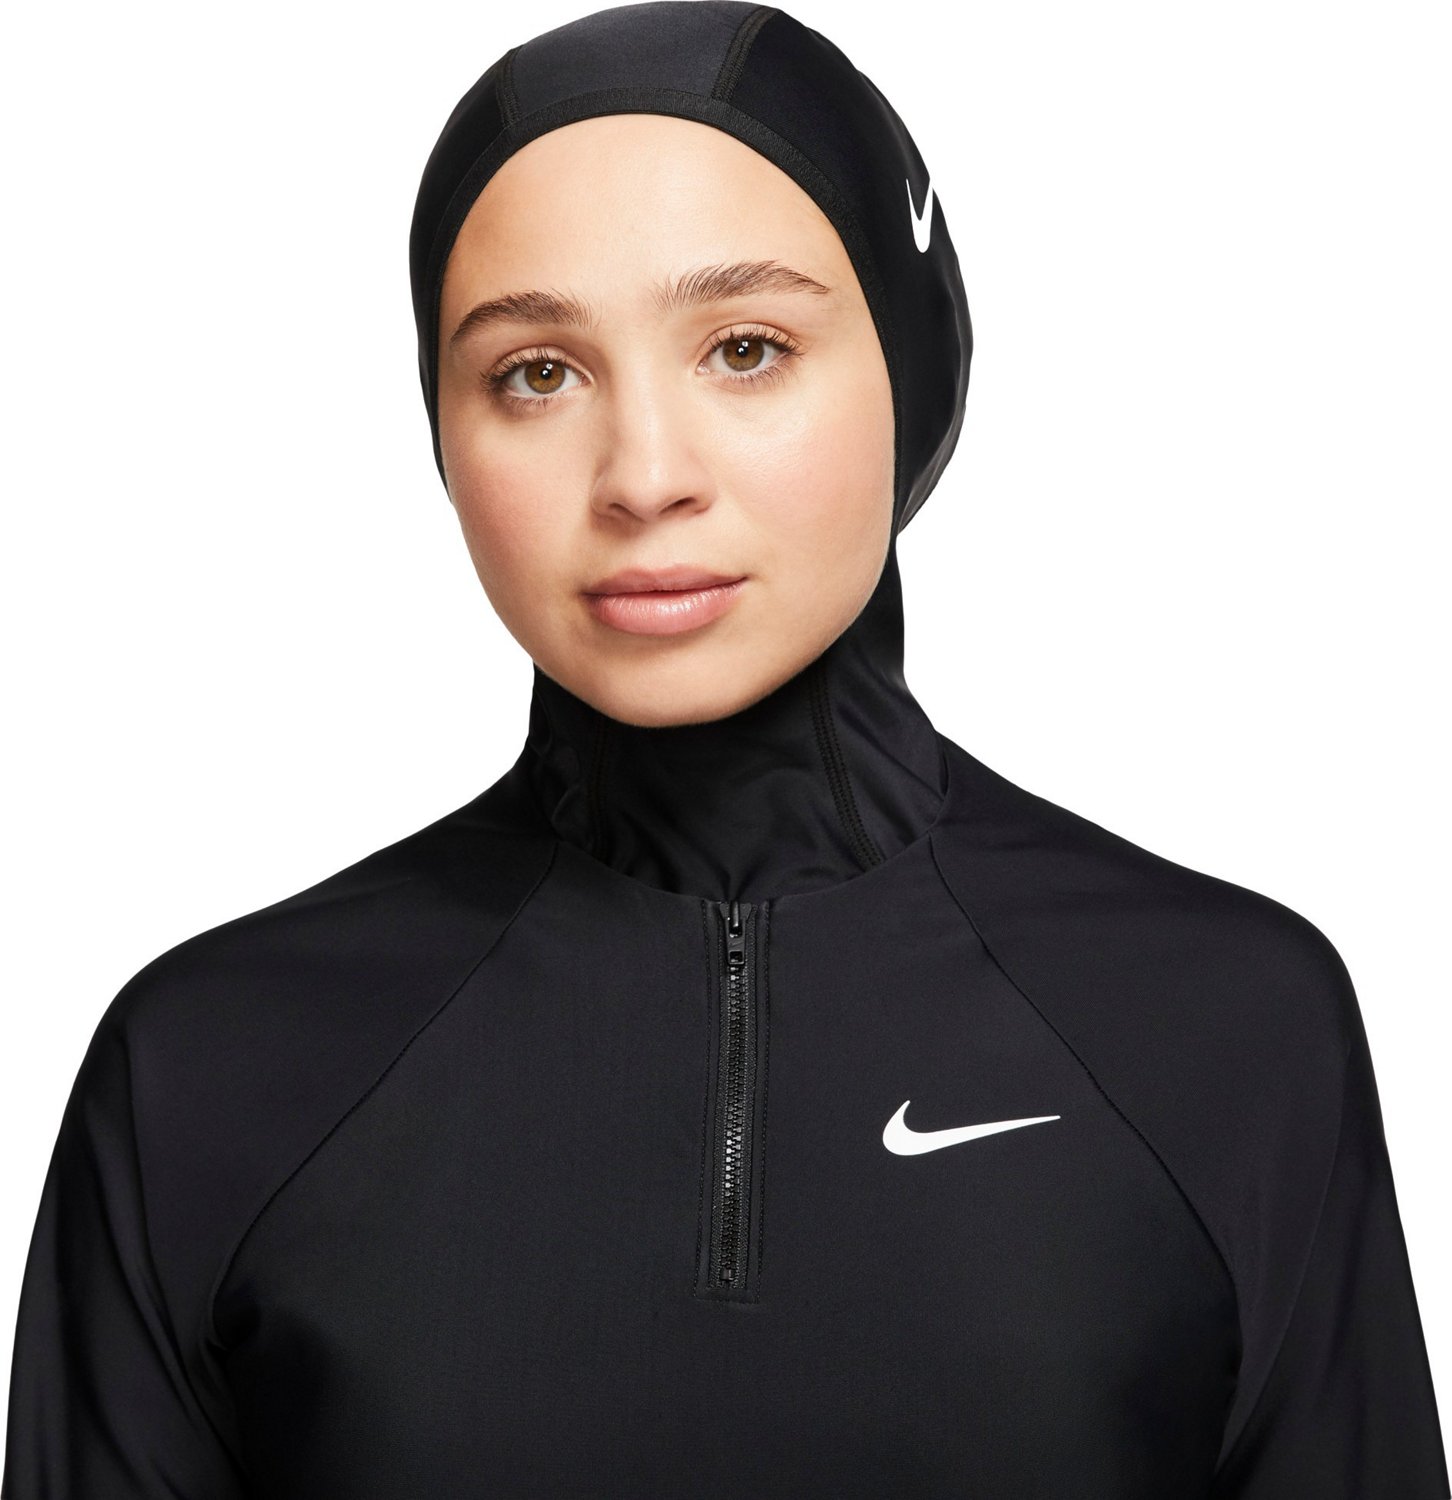 Nike Women's Victory Full Coverage Swim Tunic